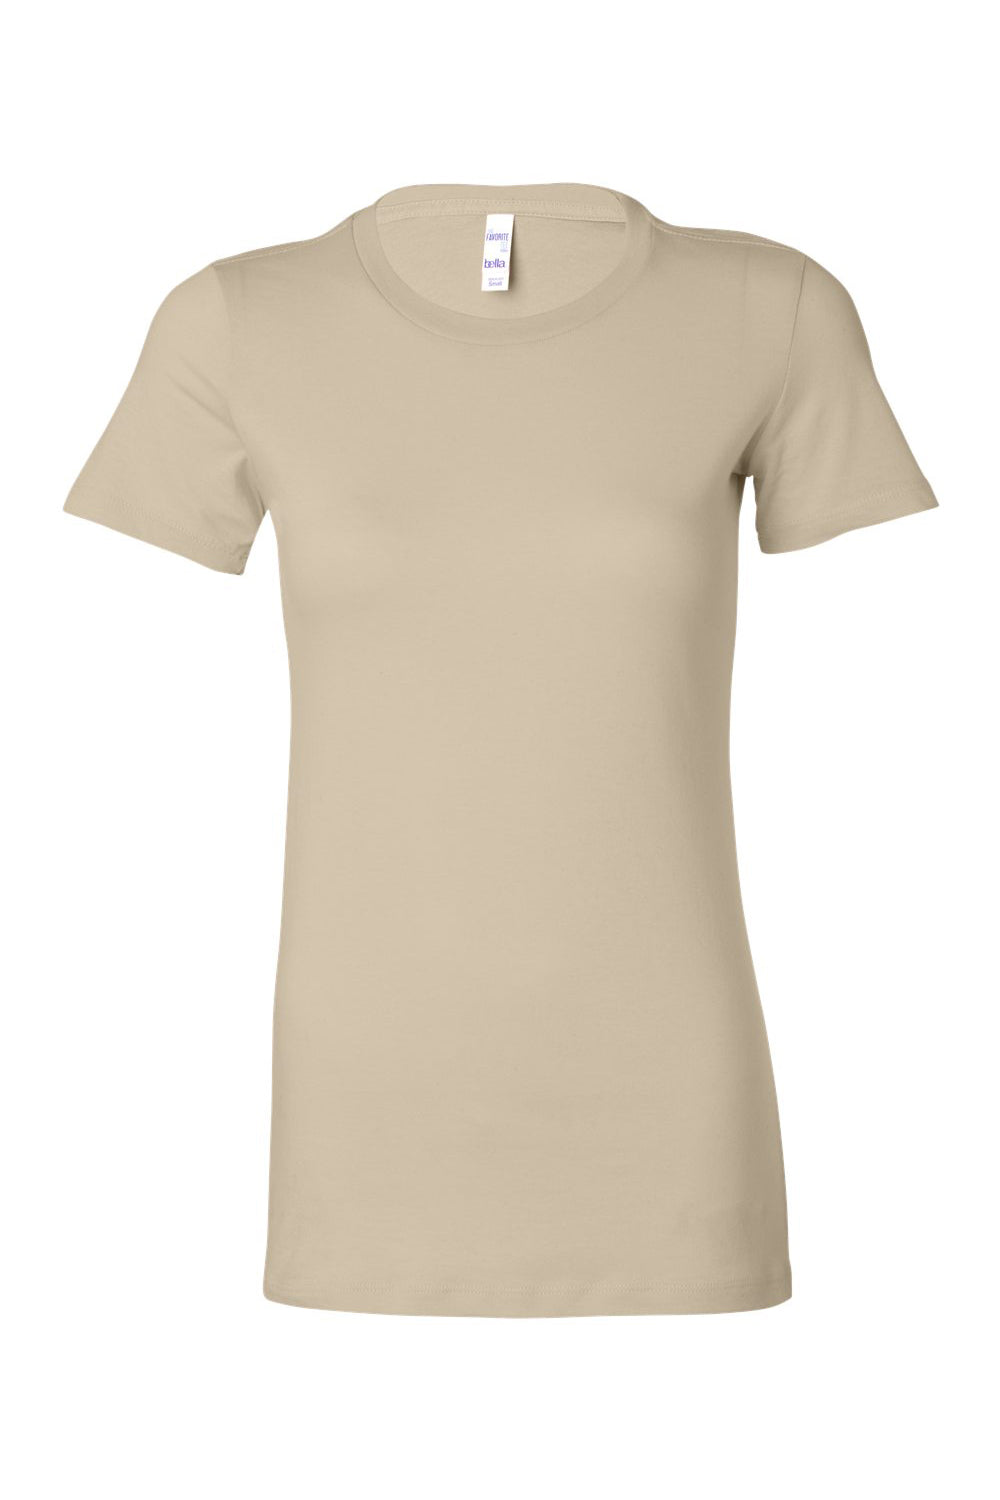 Bella + Canvas BC6004/6004 Womens The Favorite Short Sleeve Crewneck T-Shirt Soft Cream Flat Front